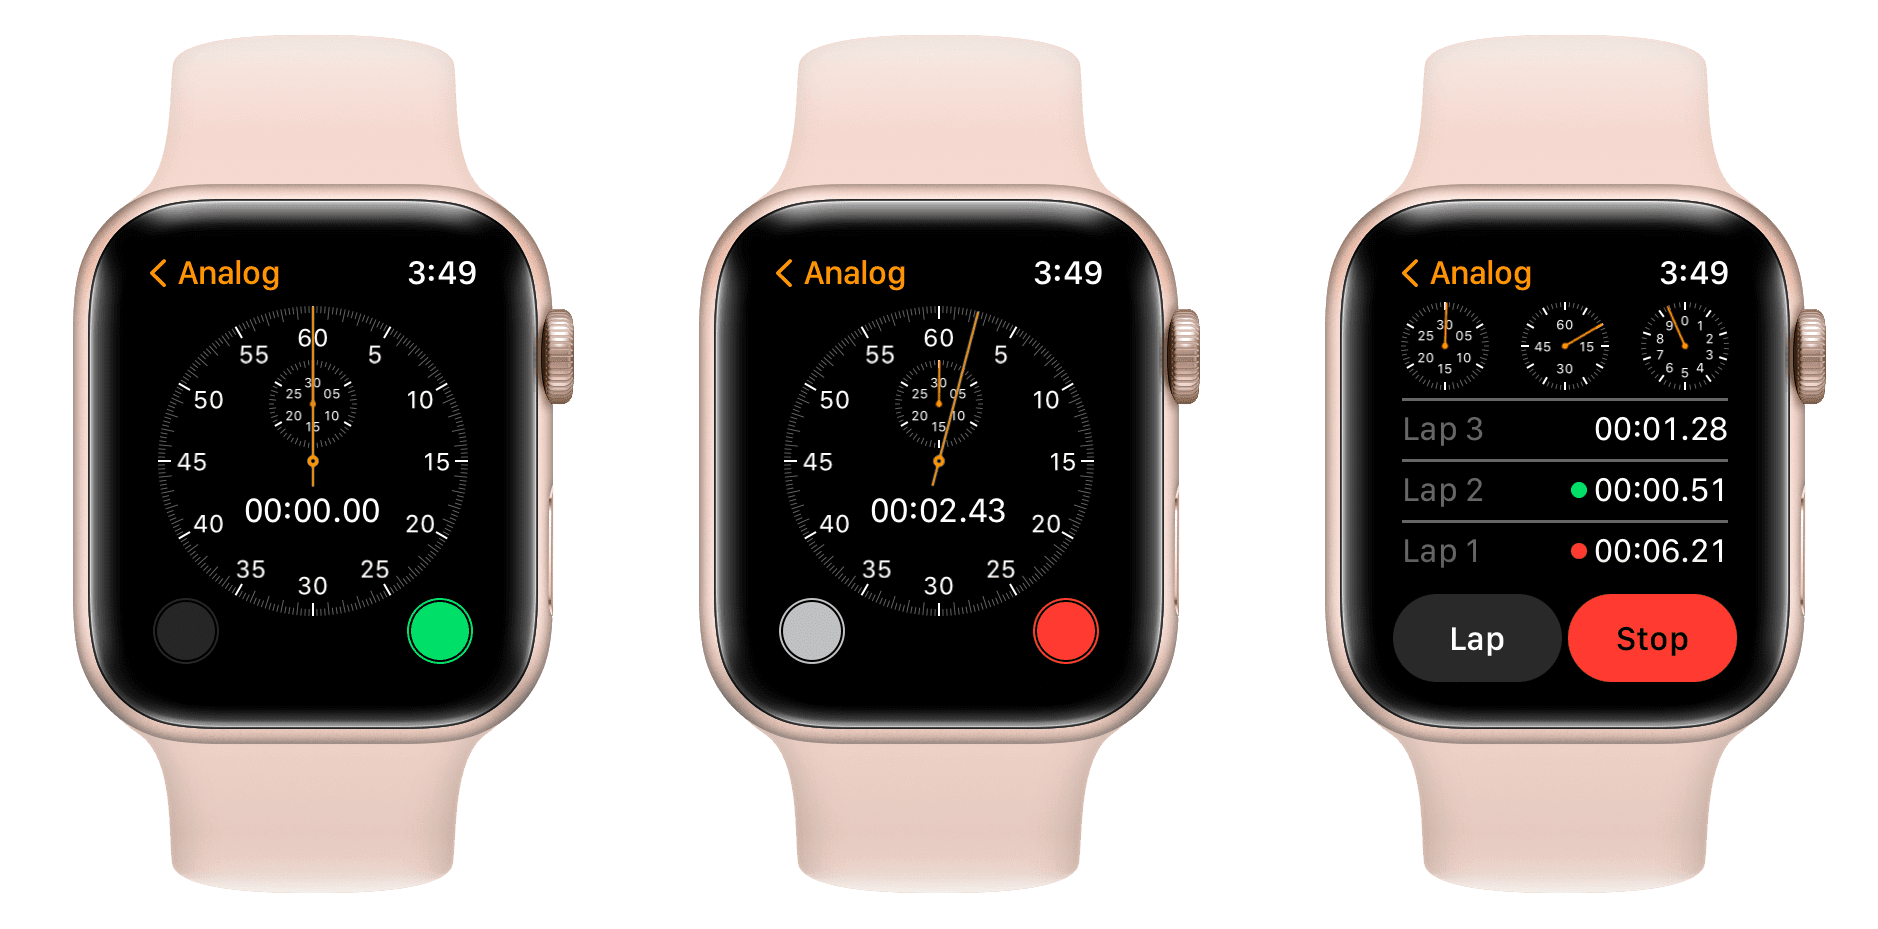 Analog style stopwatch on Apple Watch